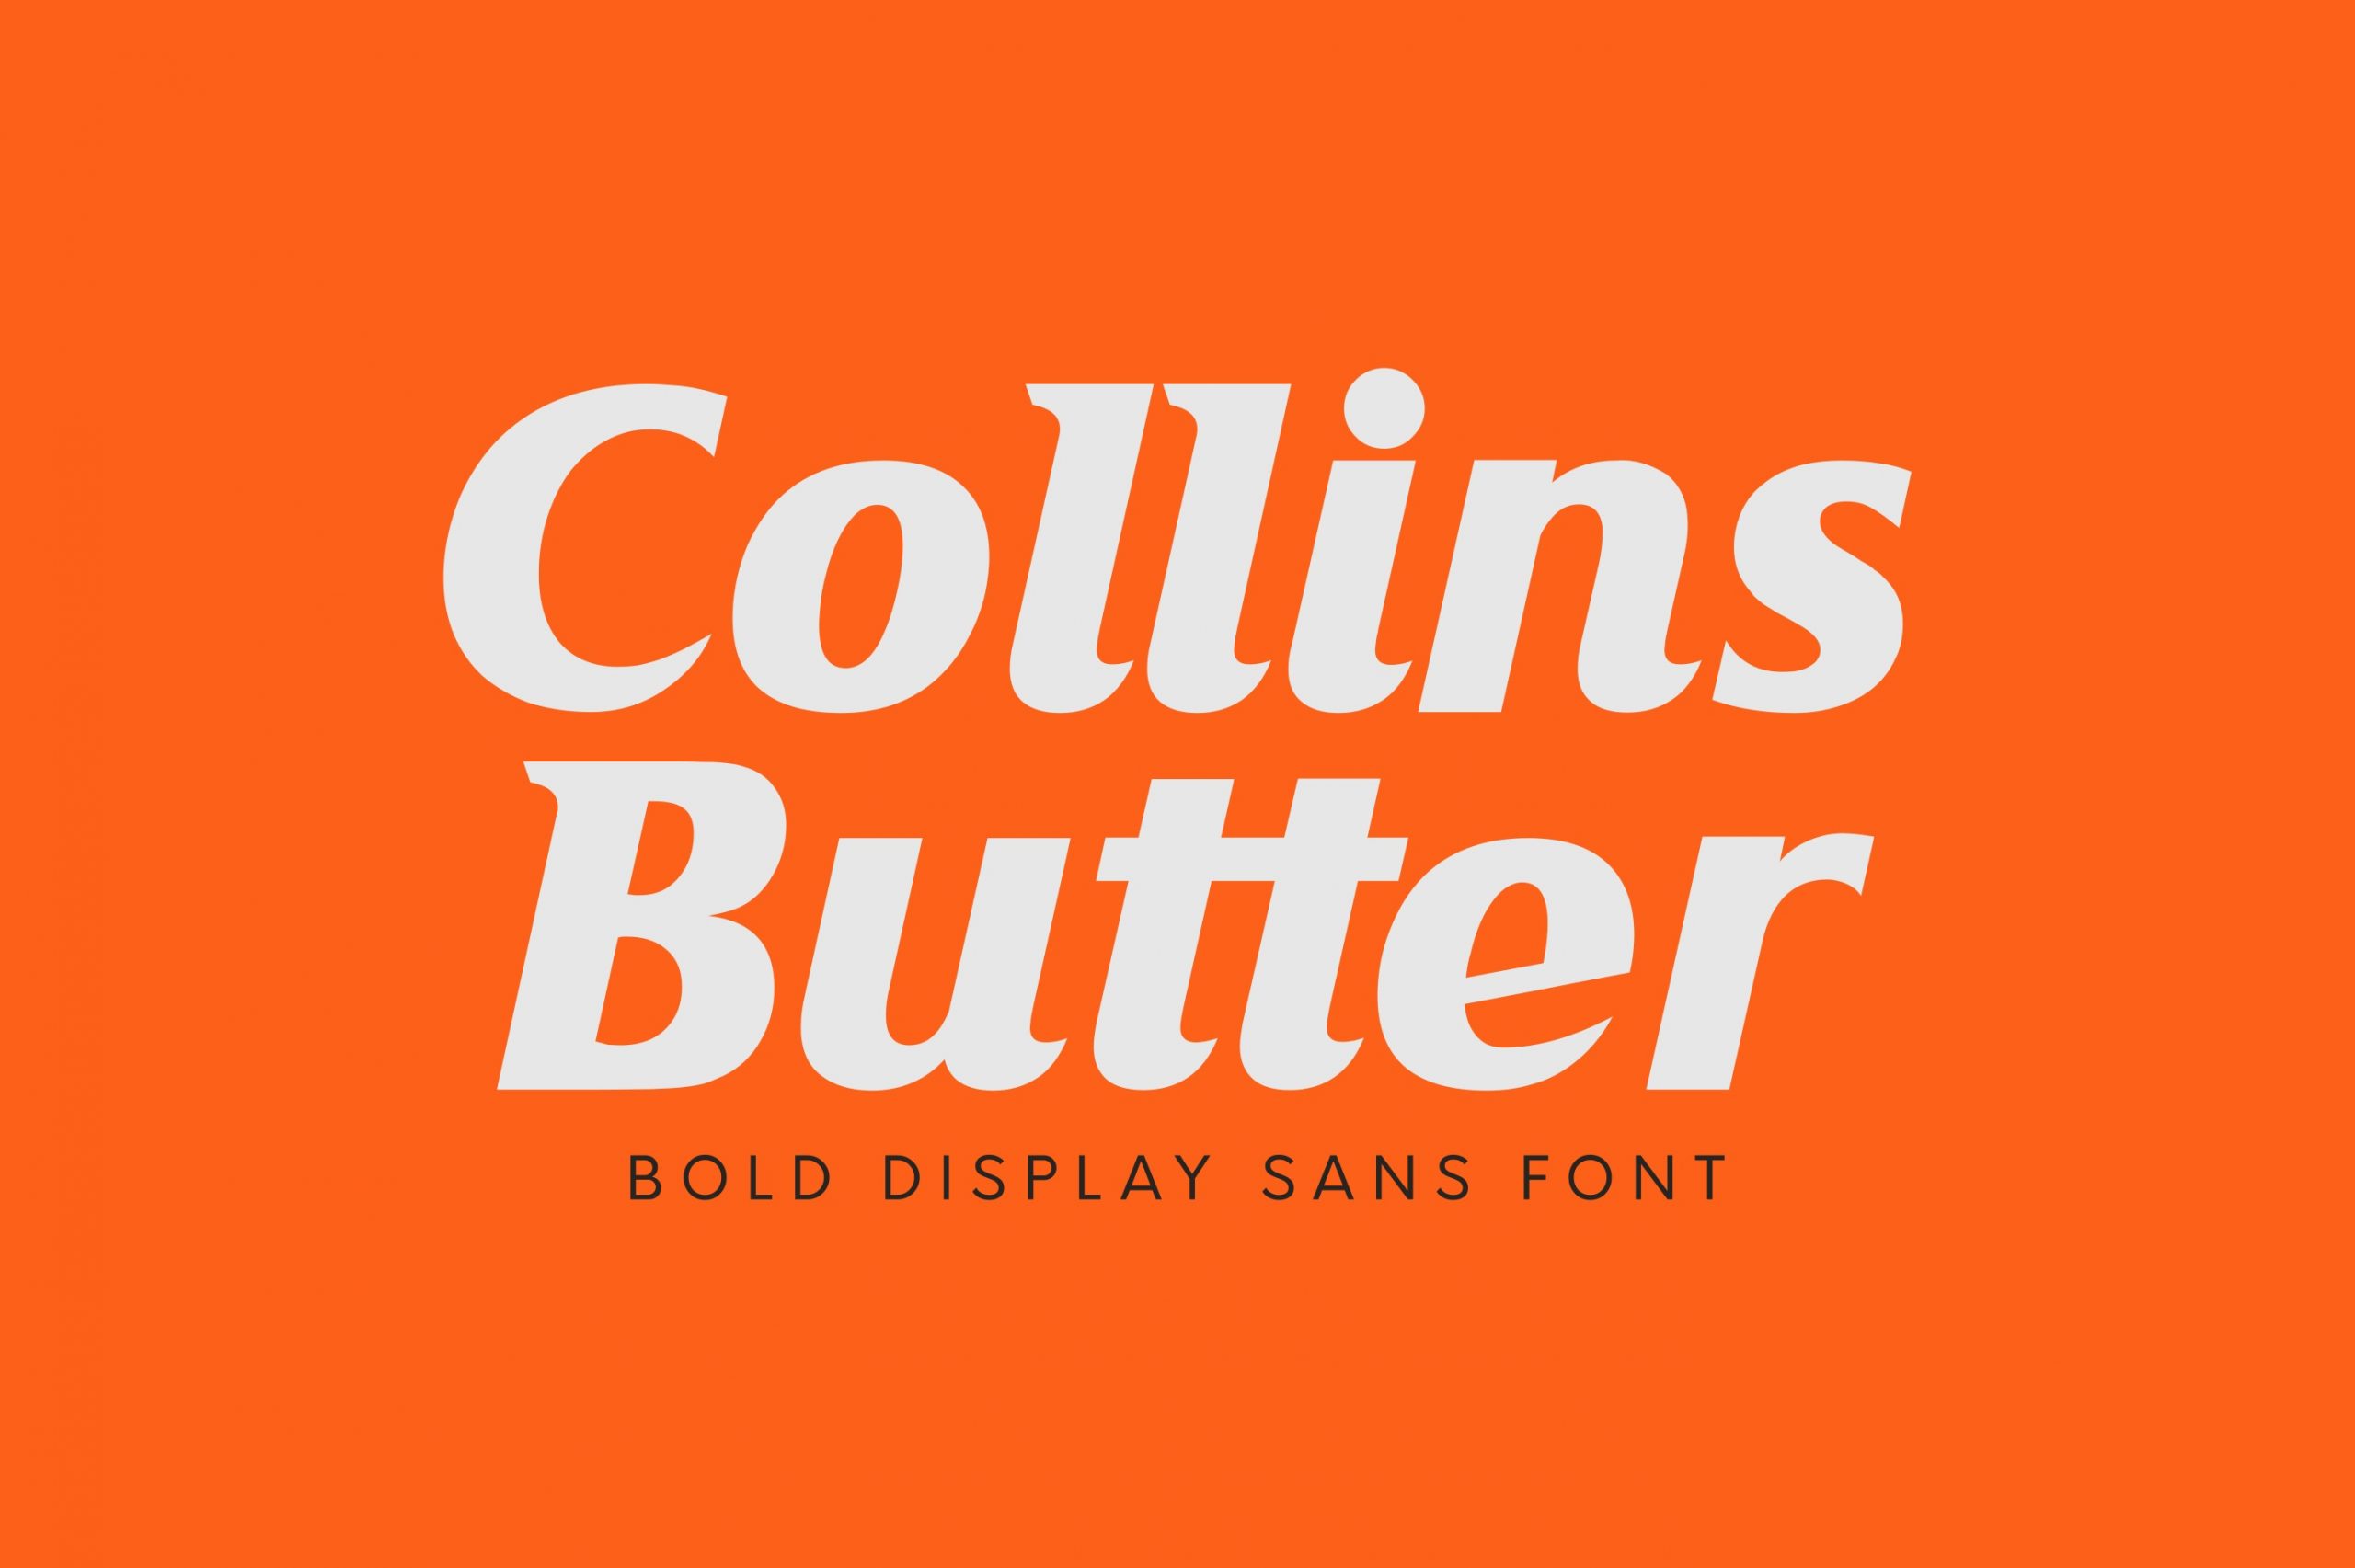 Brolian Stylish Display Font – Free Design Resources